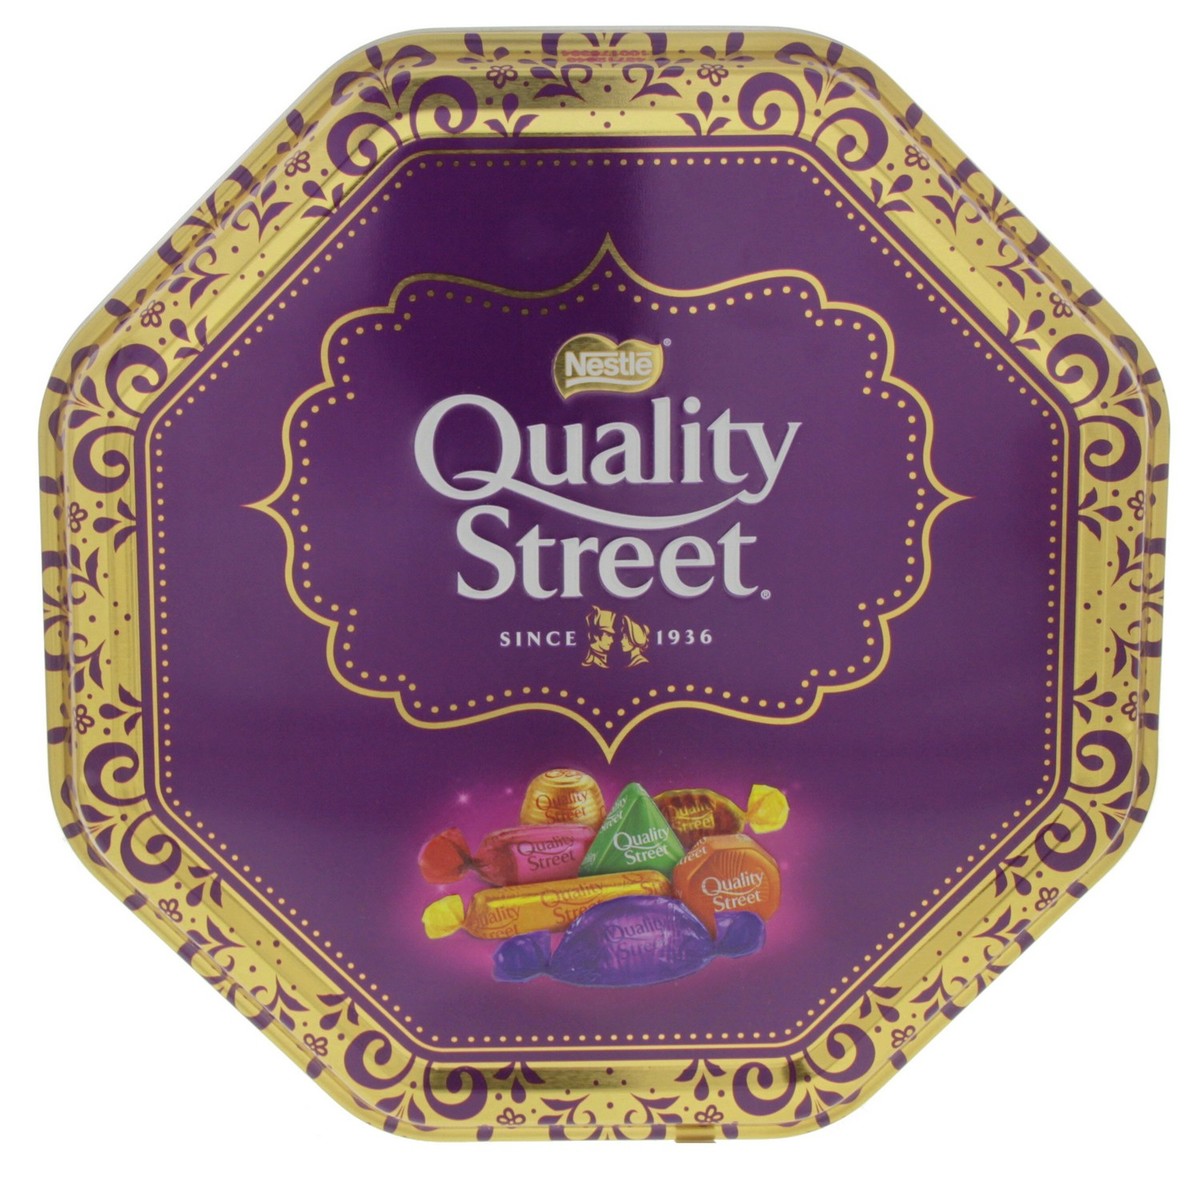 Nestle Quality Street Chocolates 1.2kg